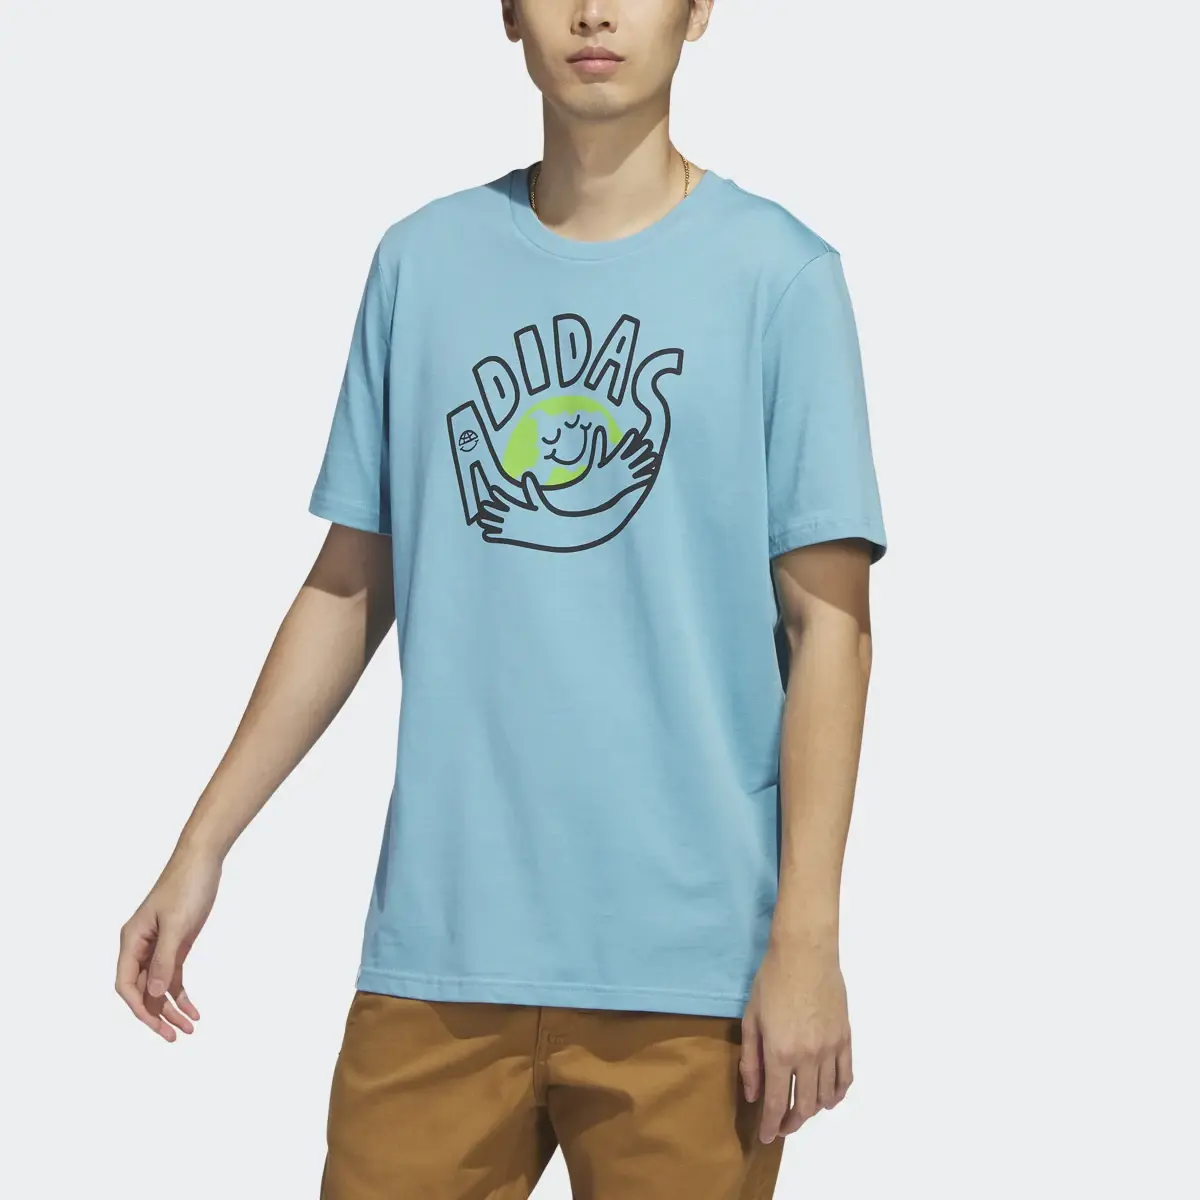 Adidas Change Through Sports Earth Graphic T-Shirt. 1